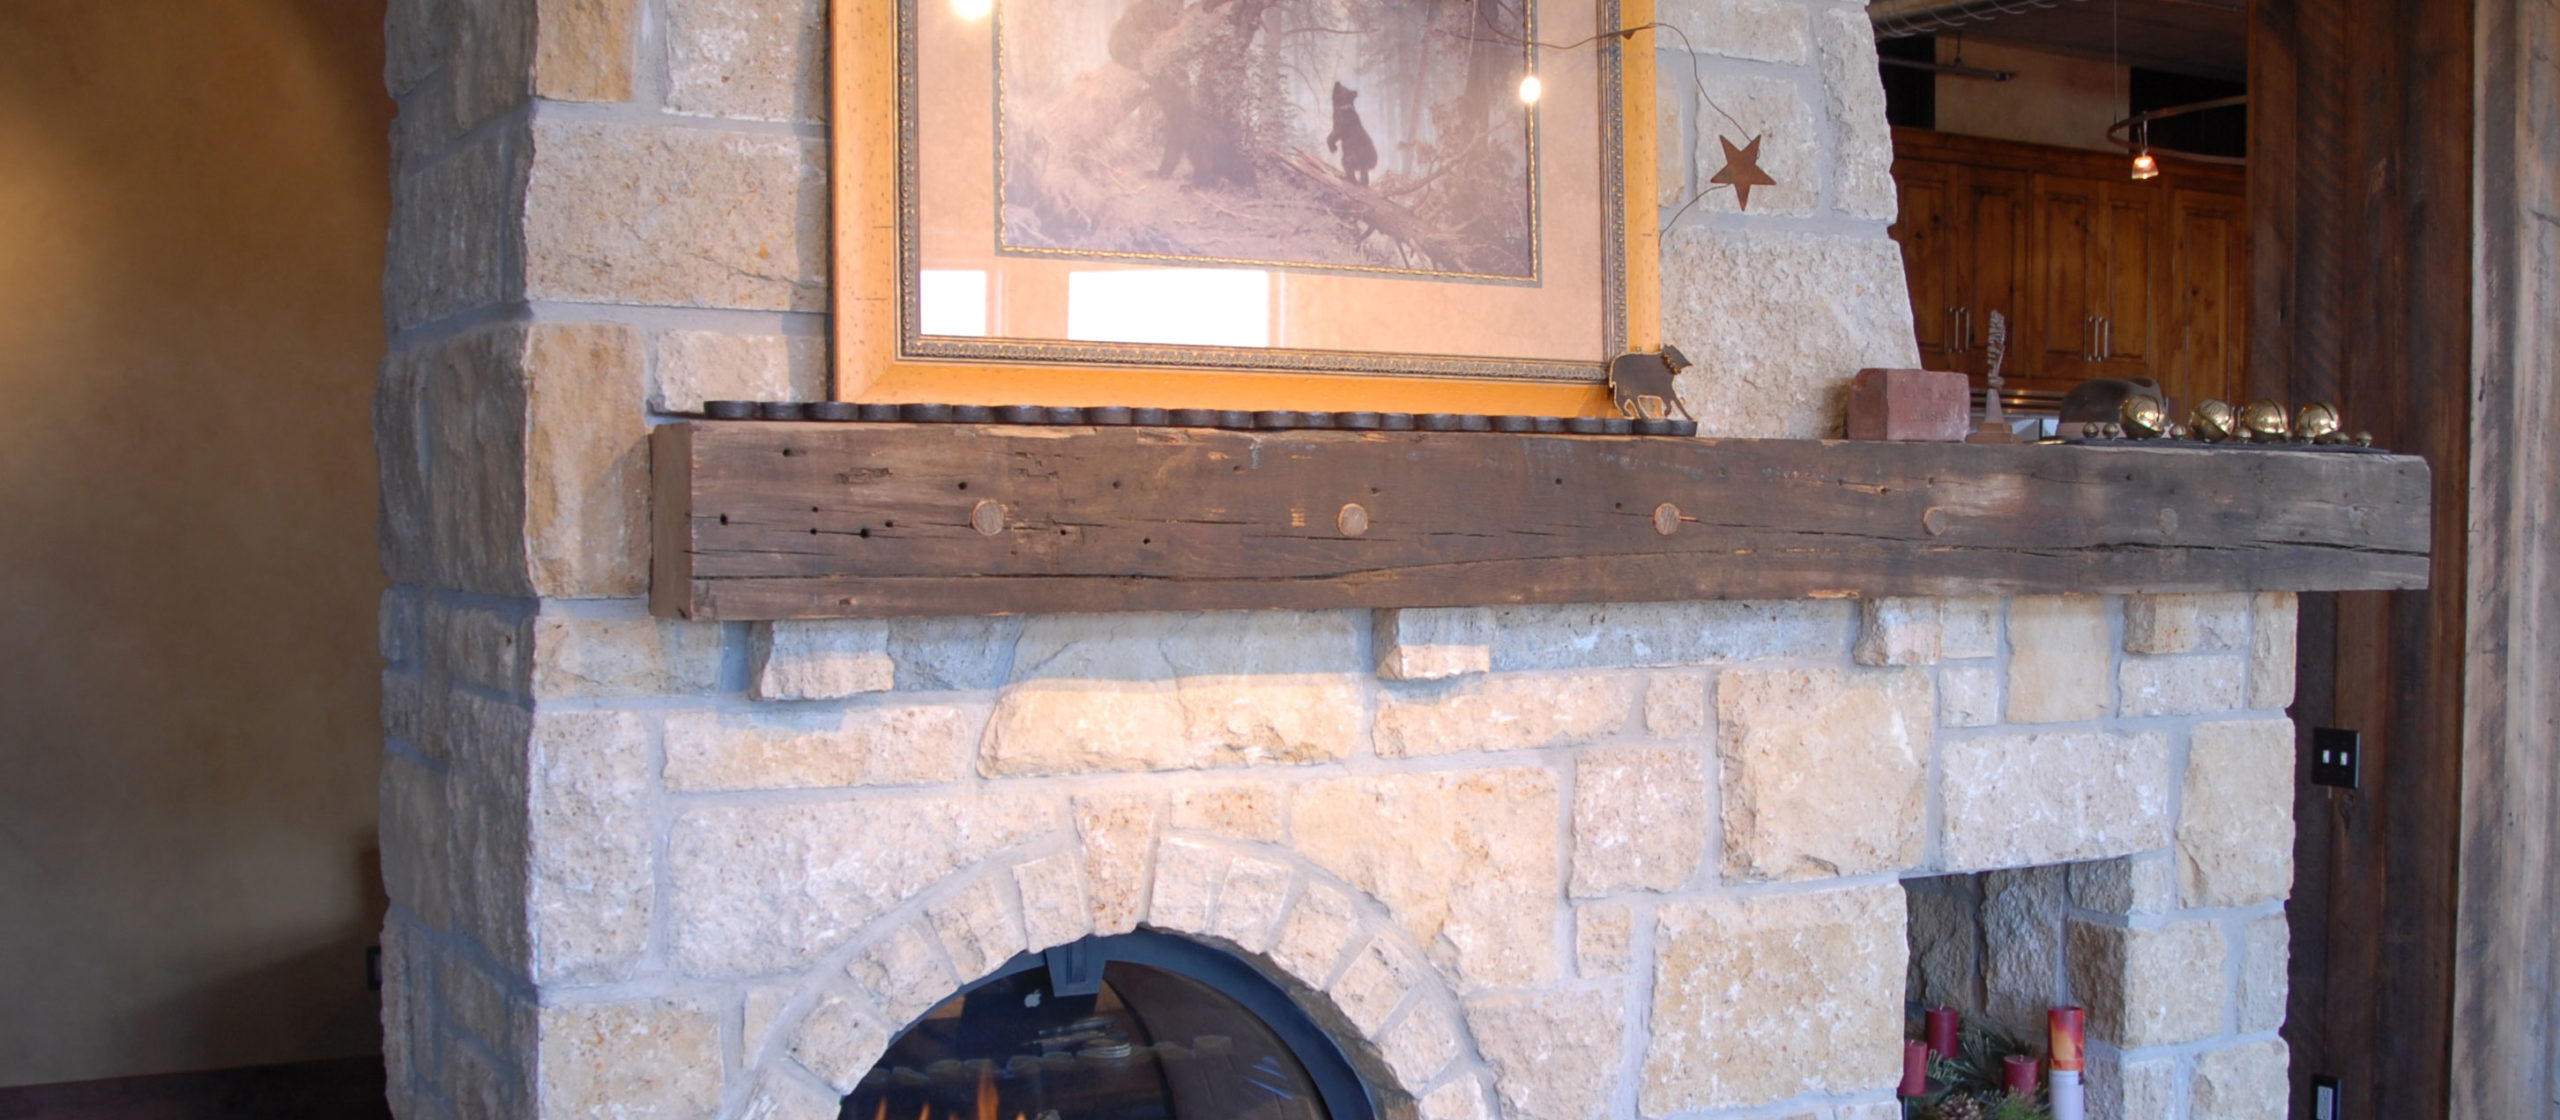 Rough Sawn Beam Fireplace Mantle 8x8, Rough Cut Fireplace Mantels